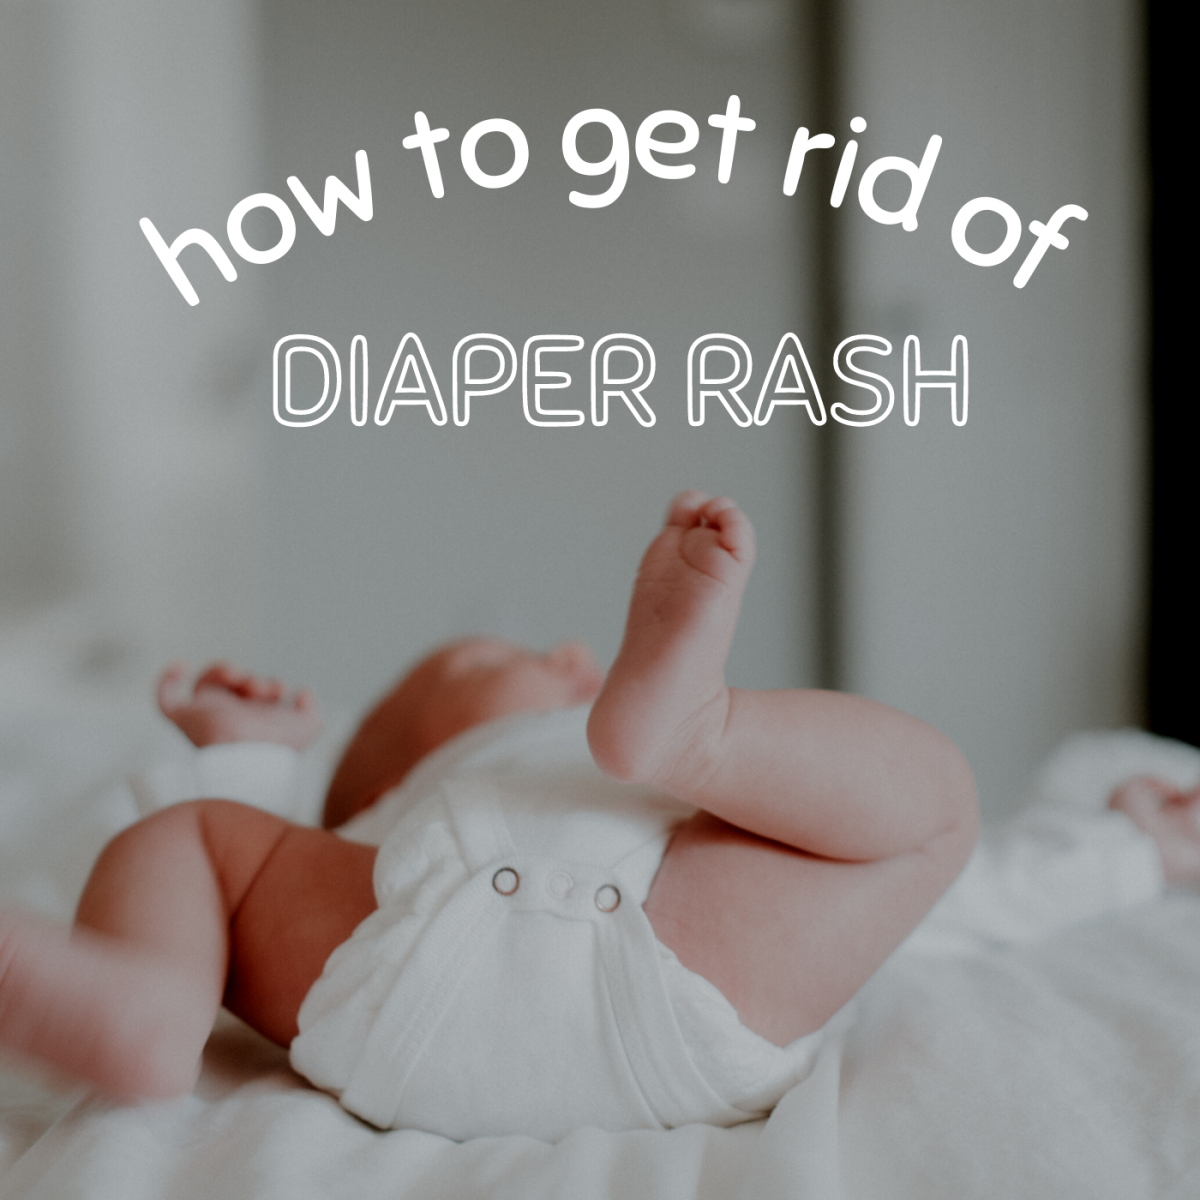 Tips for getting rid of diaper rash.